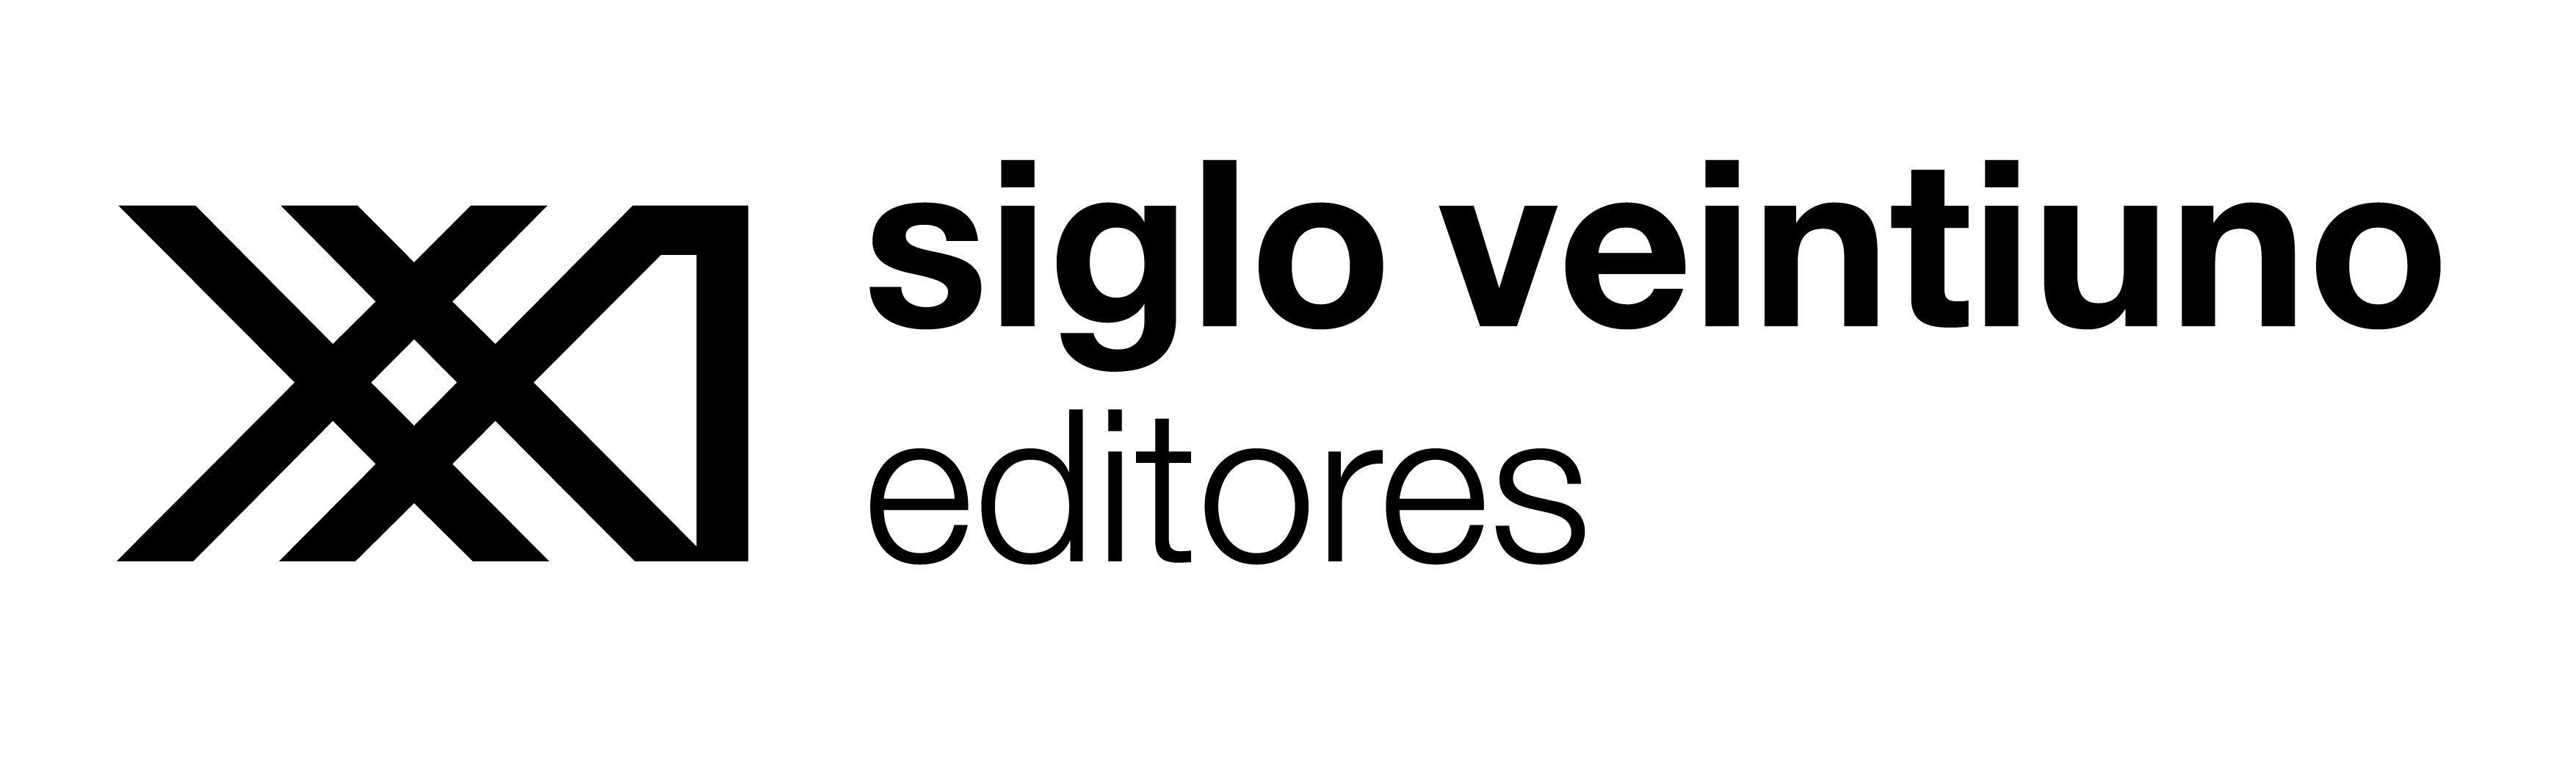 XXI Logo - File:Siglo xxi logo.jpg - Wikimedia Commons